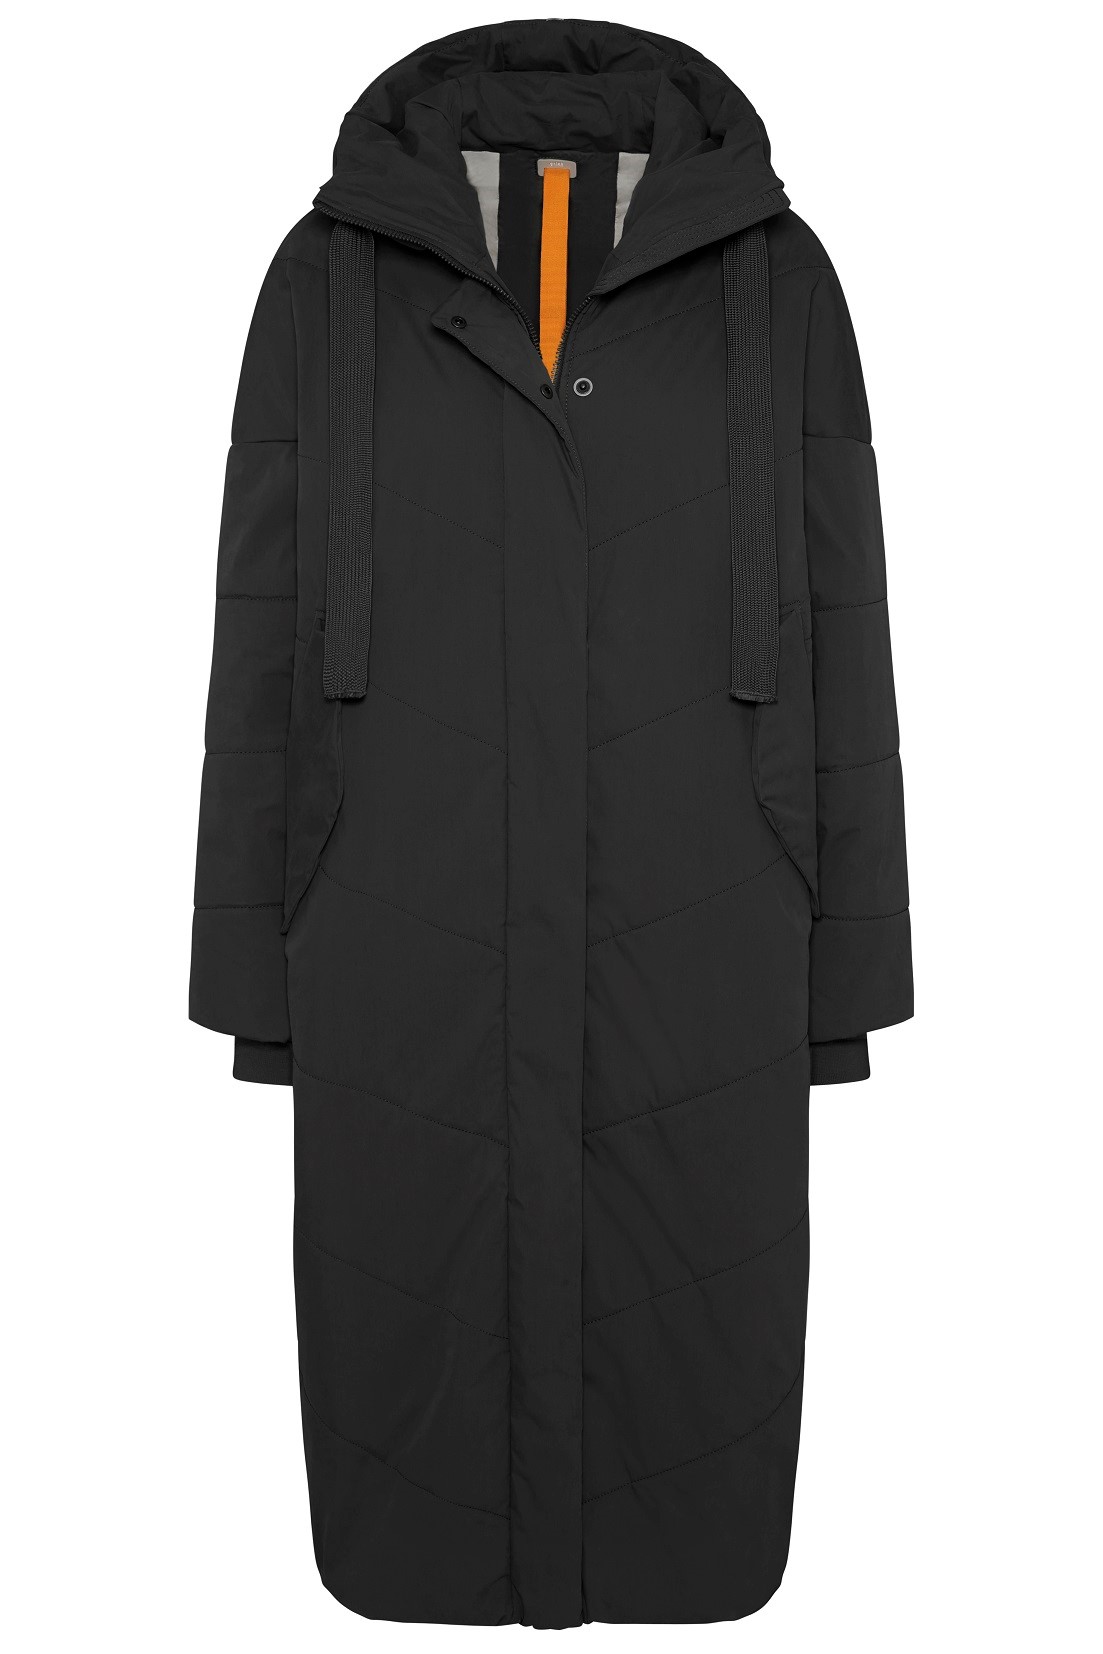 g-lab Aura Soft Touch Coat in Black